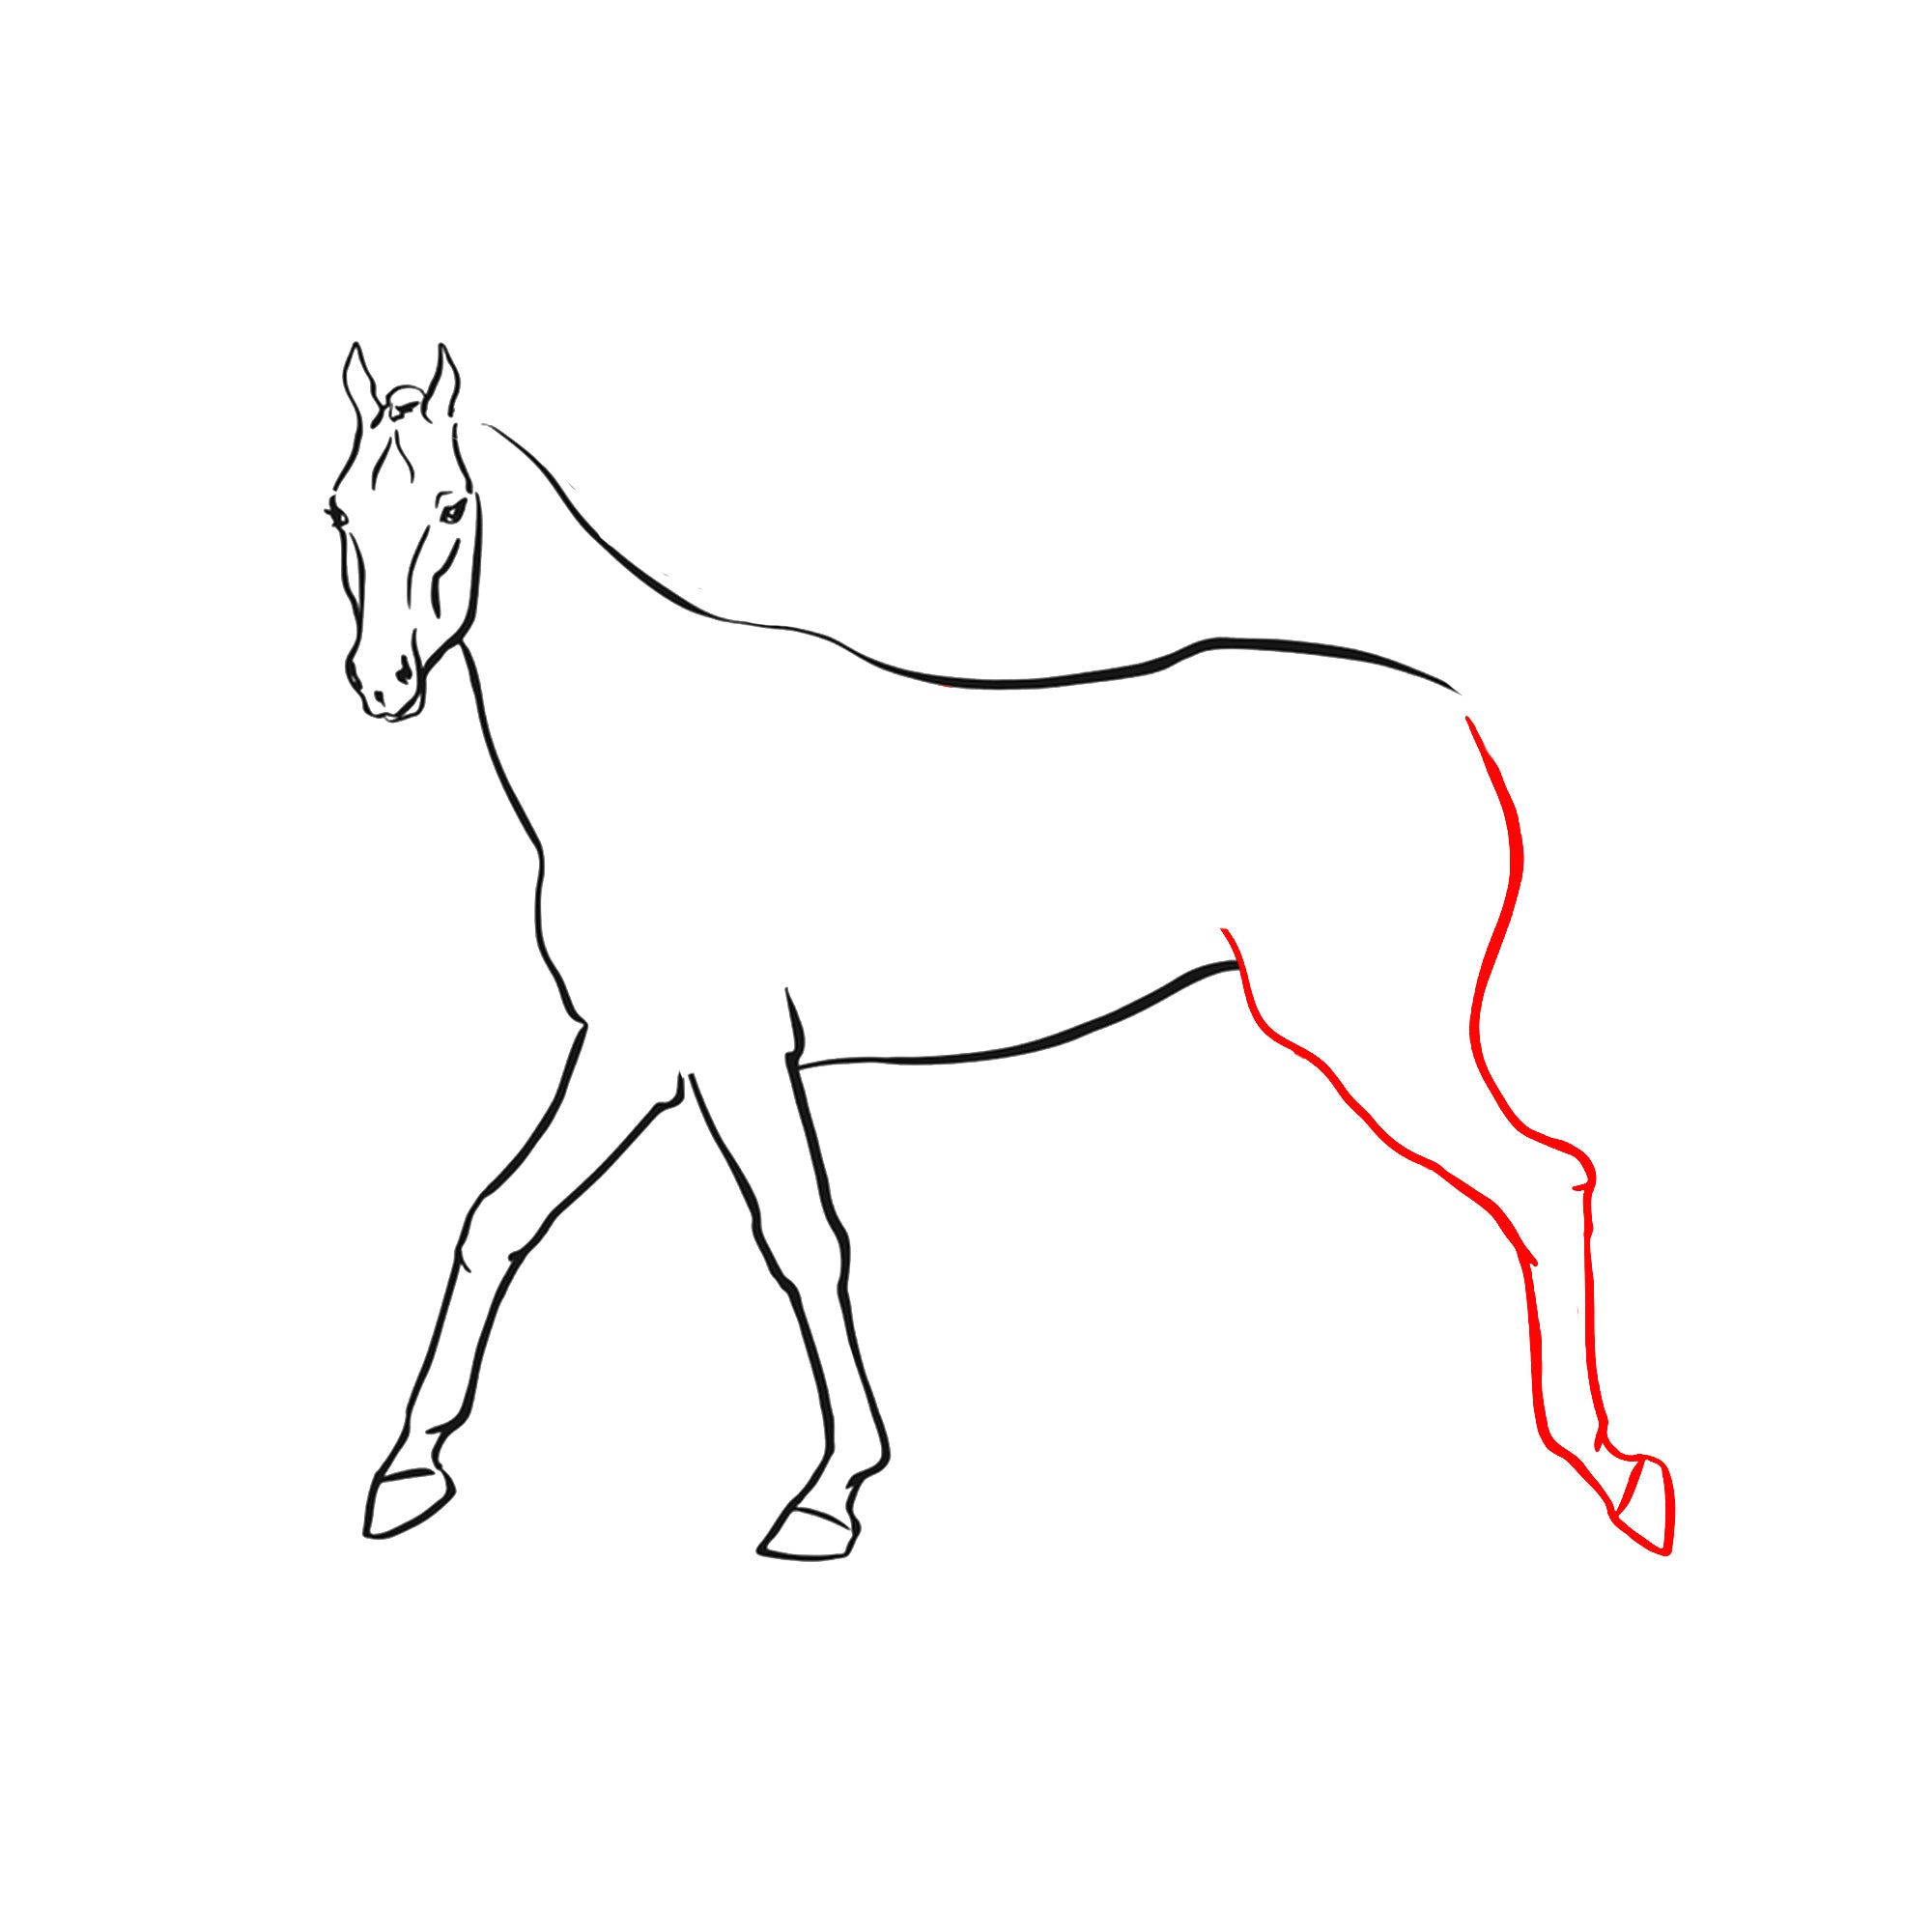 hind-leg-horse